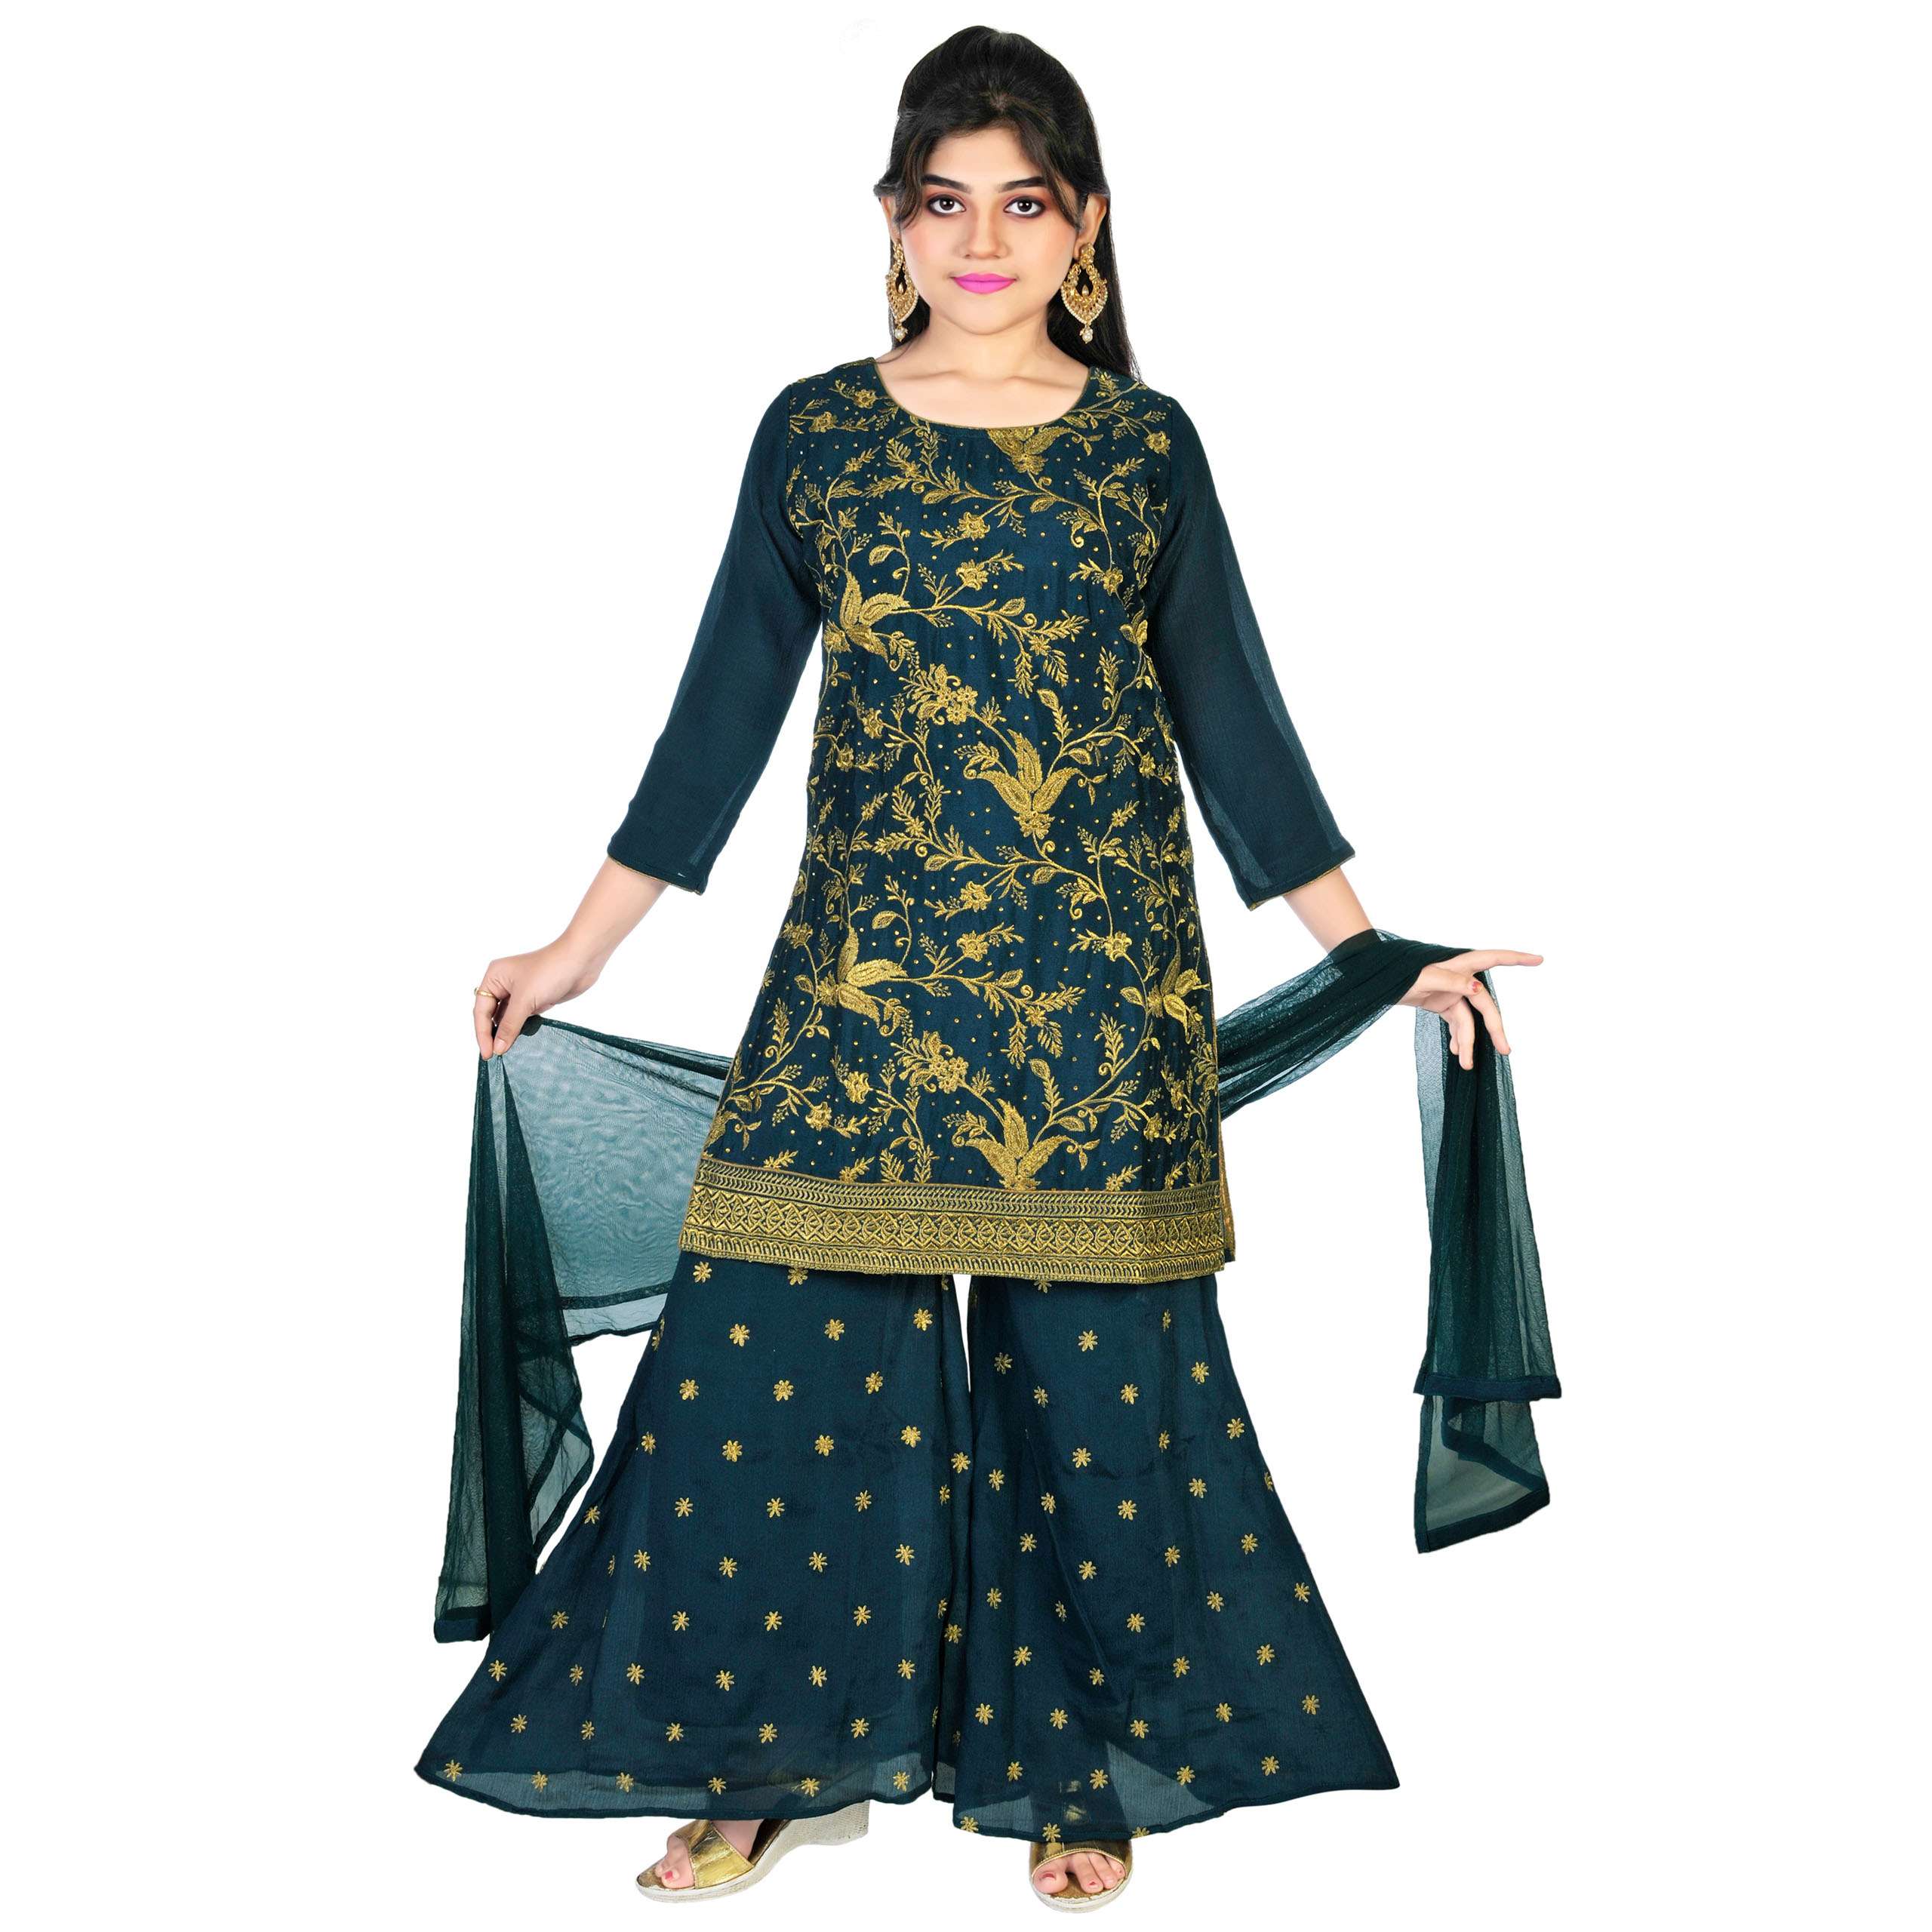 Balaji Emporium Presents Kids Wear Special Designer Indian Party Wear Sharara Salwar Kameez Suit Girlish Dress Collection At Best Price 1118